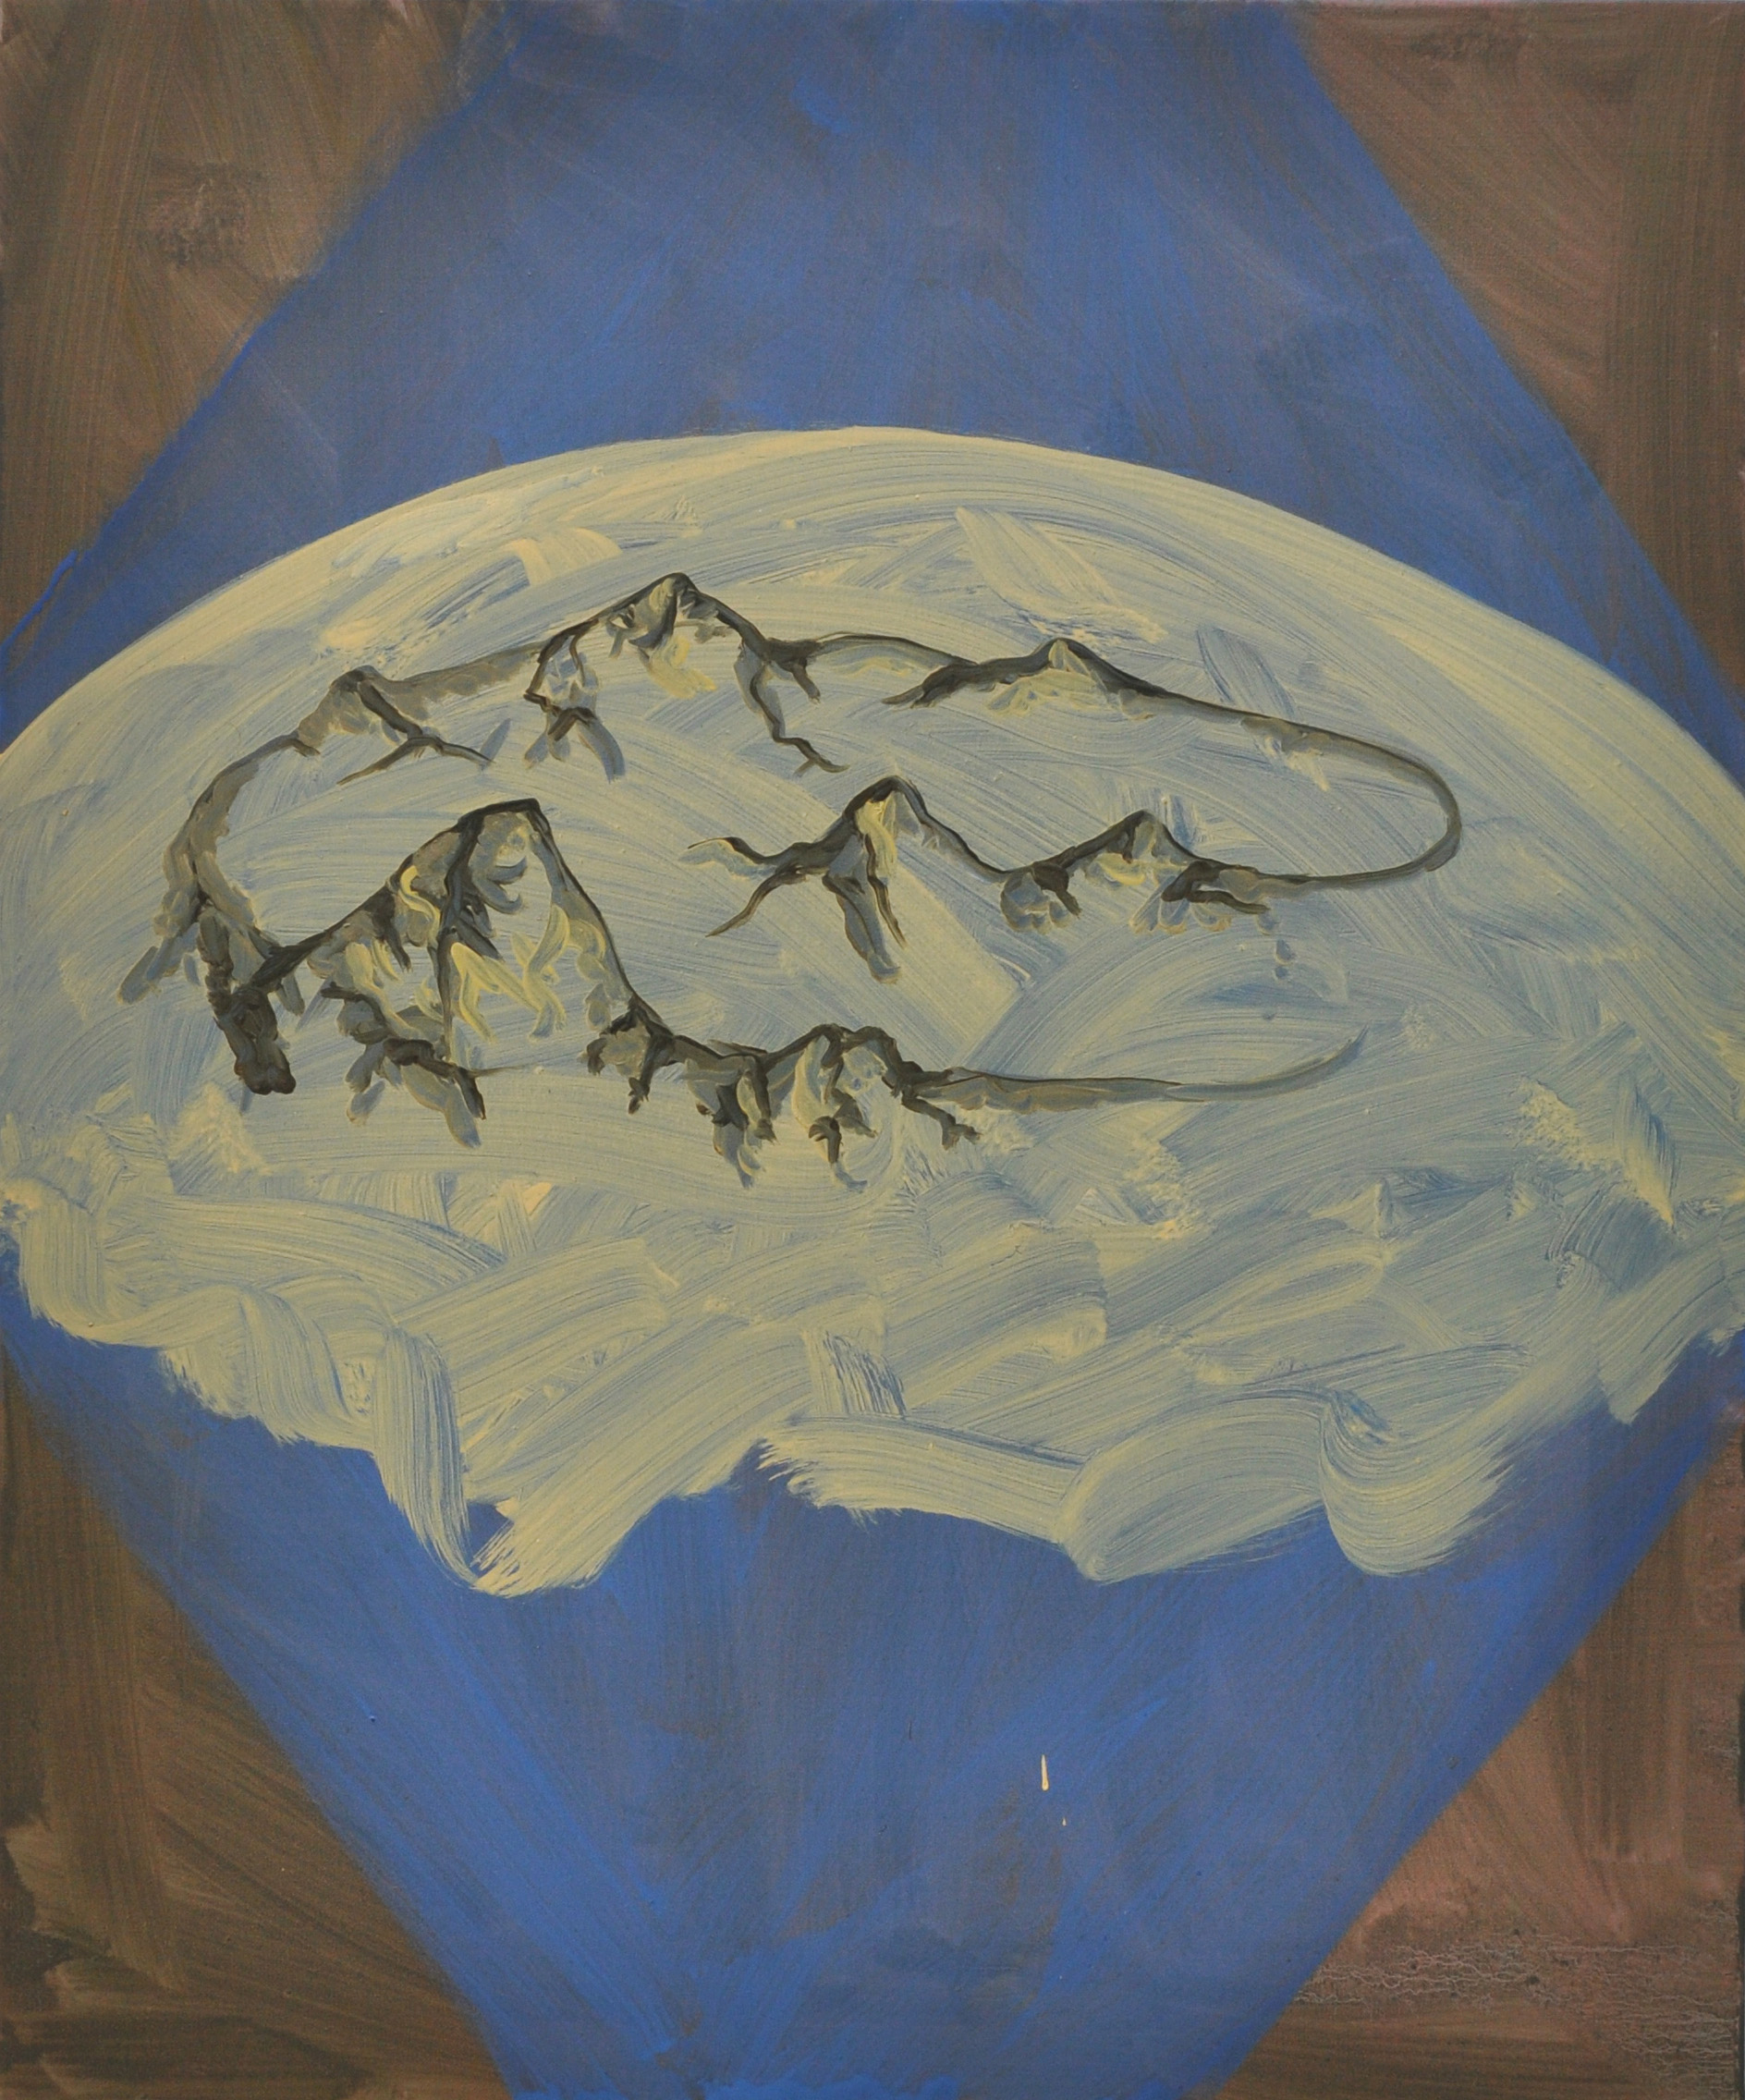 Cyclical Mountains, 2011, Oil on cotton, 60 x 50 cm